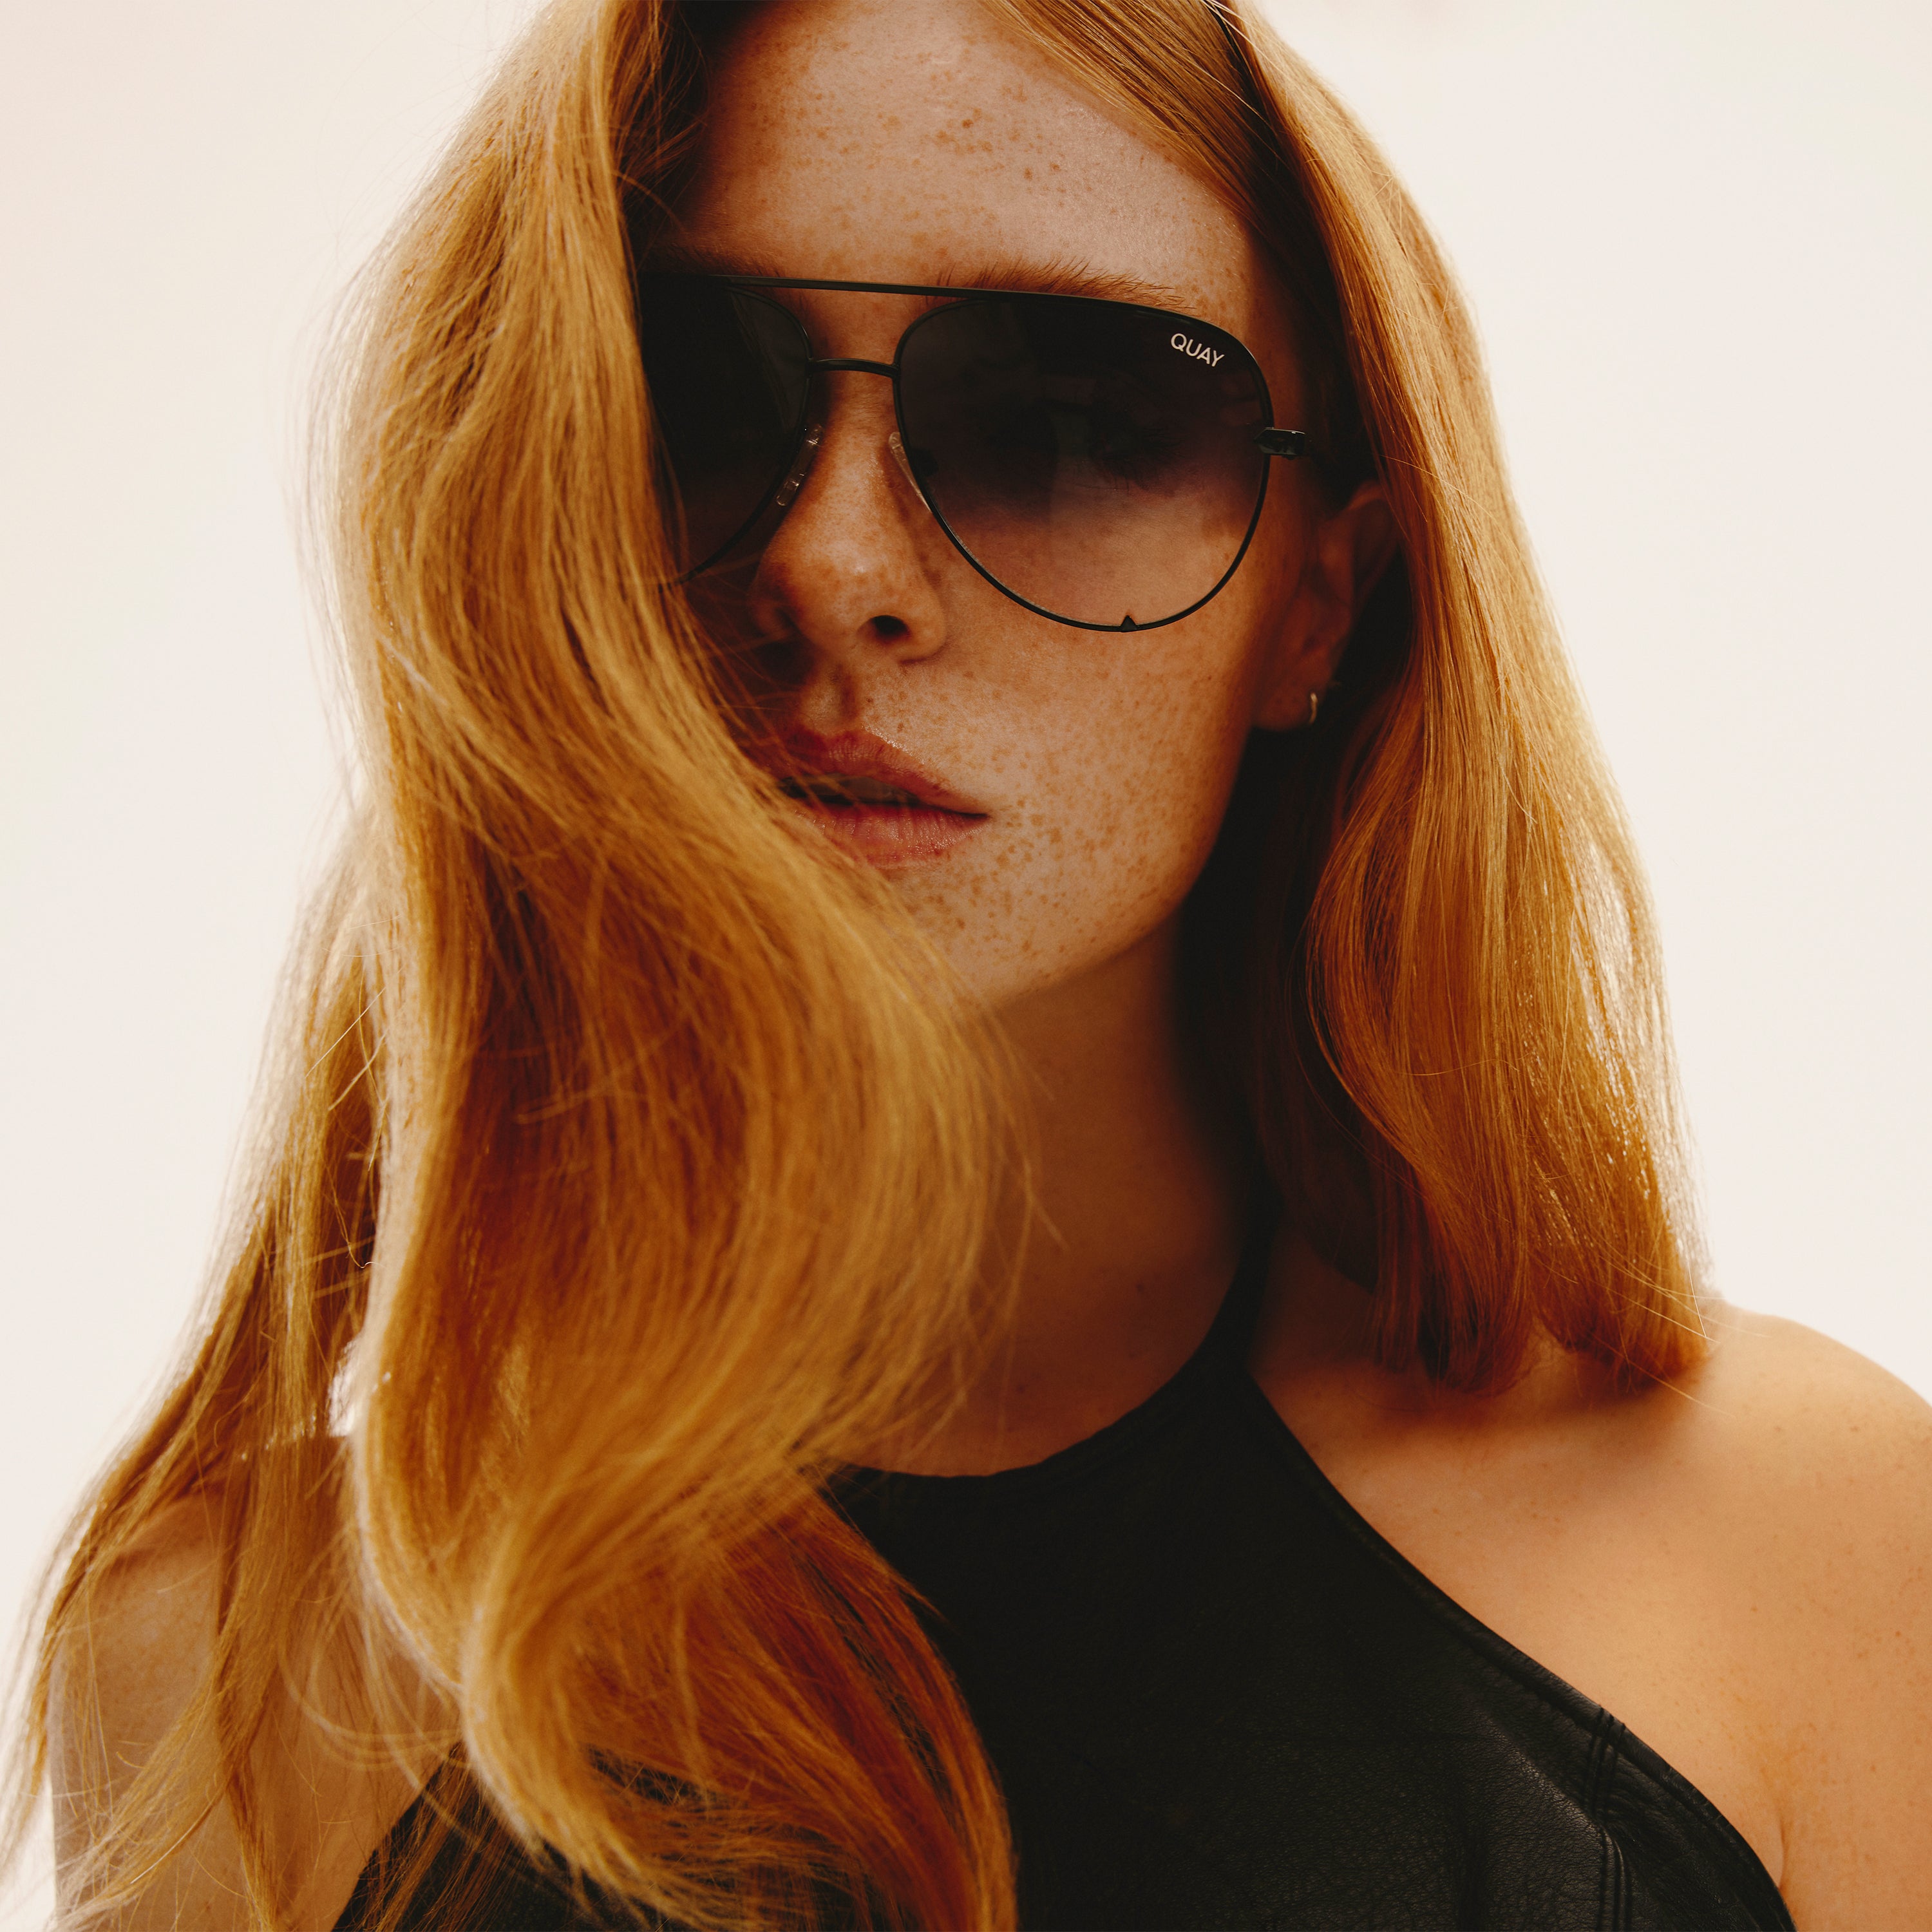 Buy Handpolished Sunglasses for Men and Women Online - Hidesign